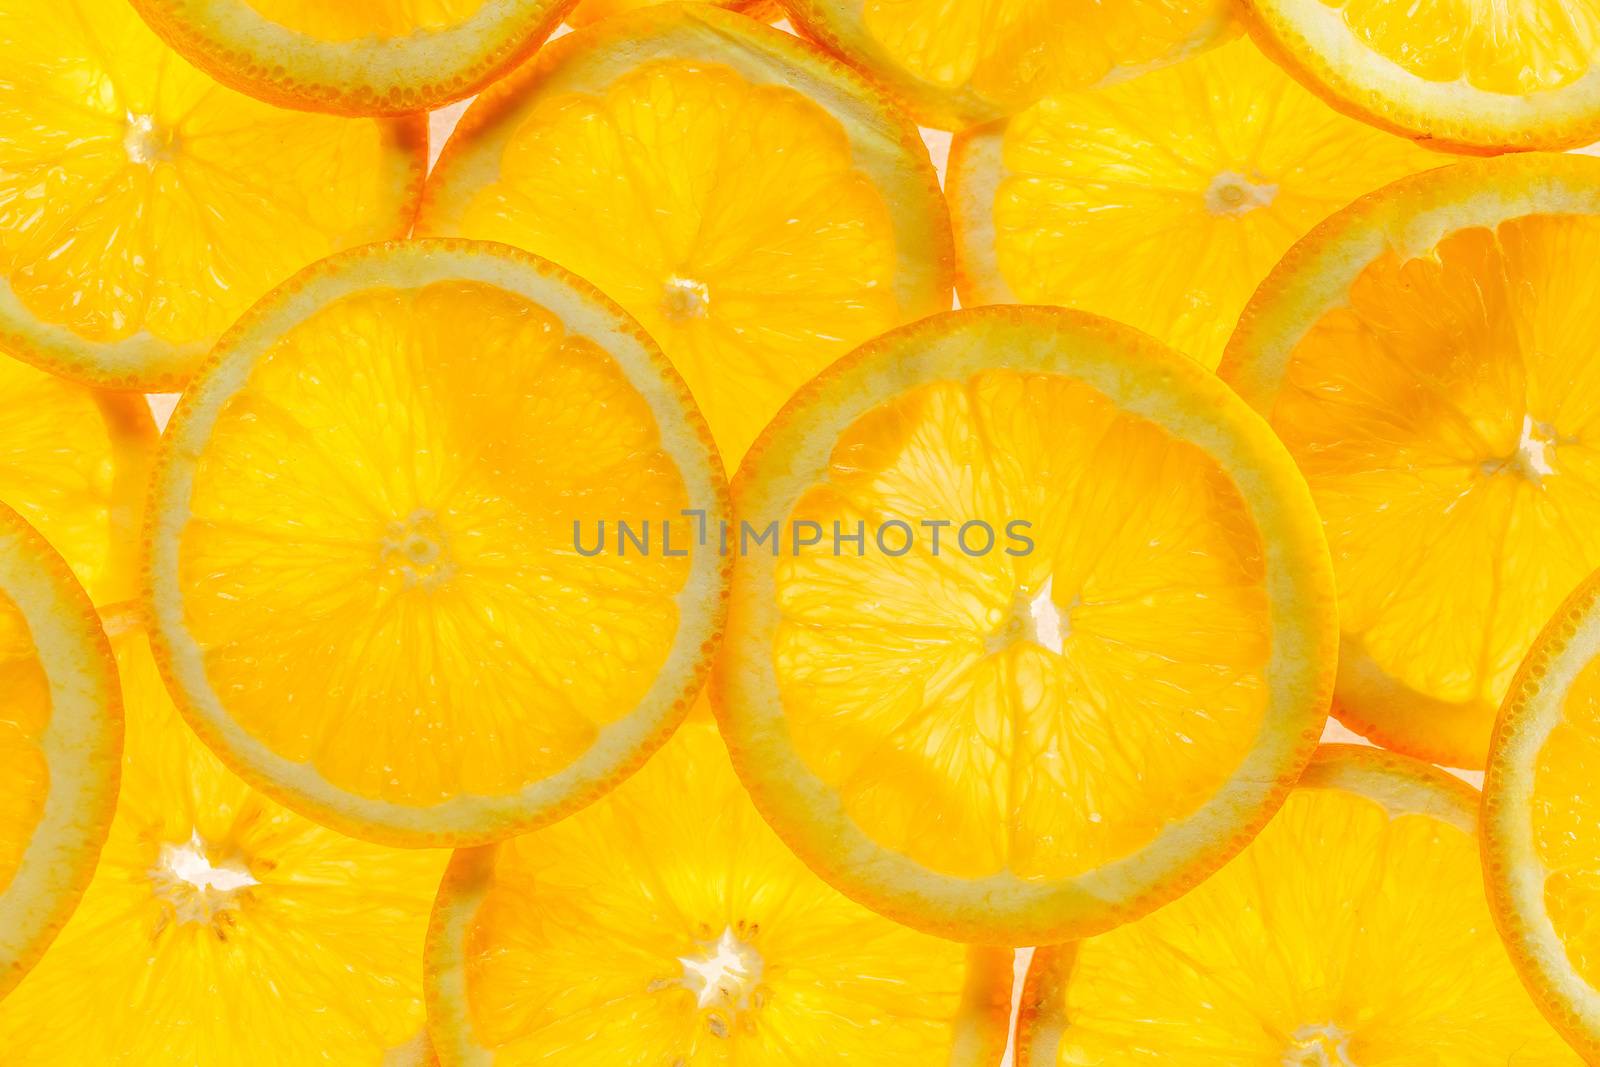 Slice of a fresh juicy orange round orange